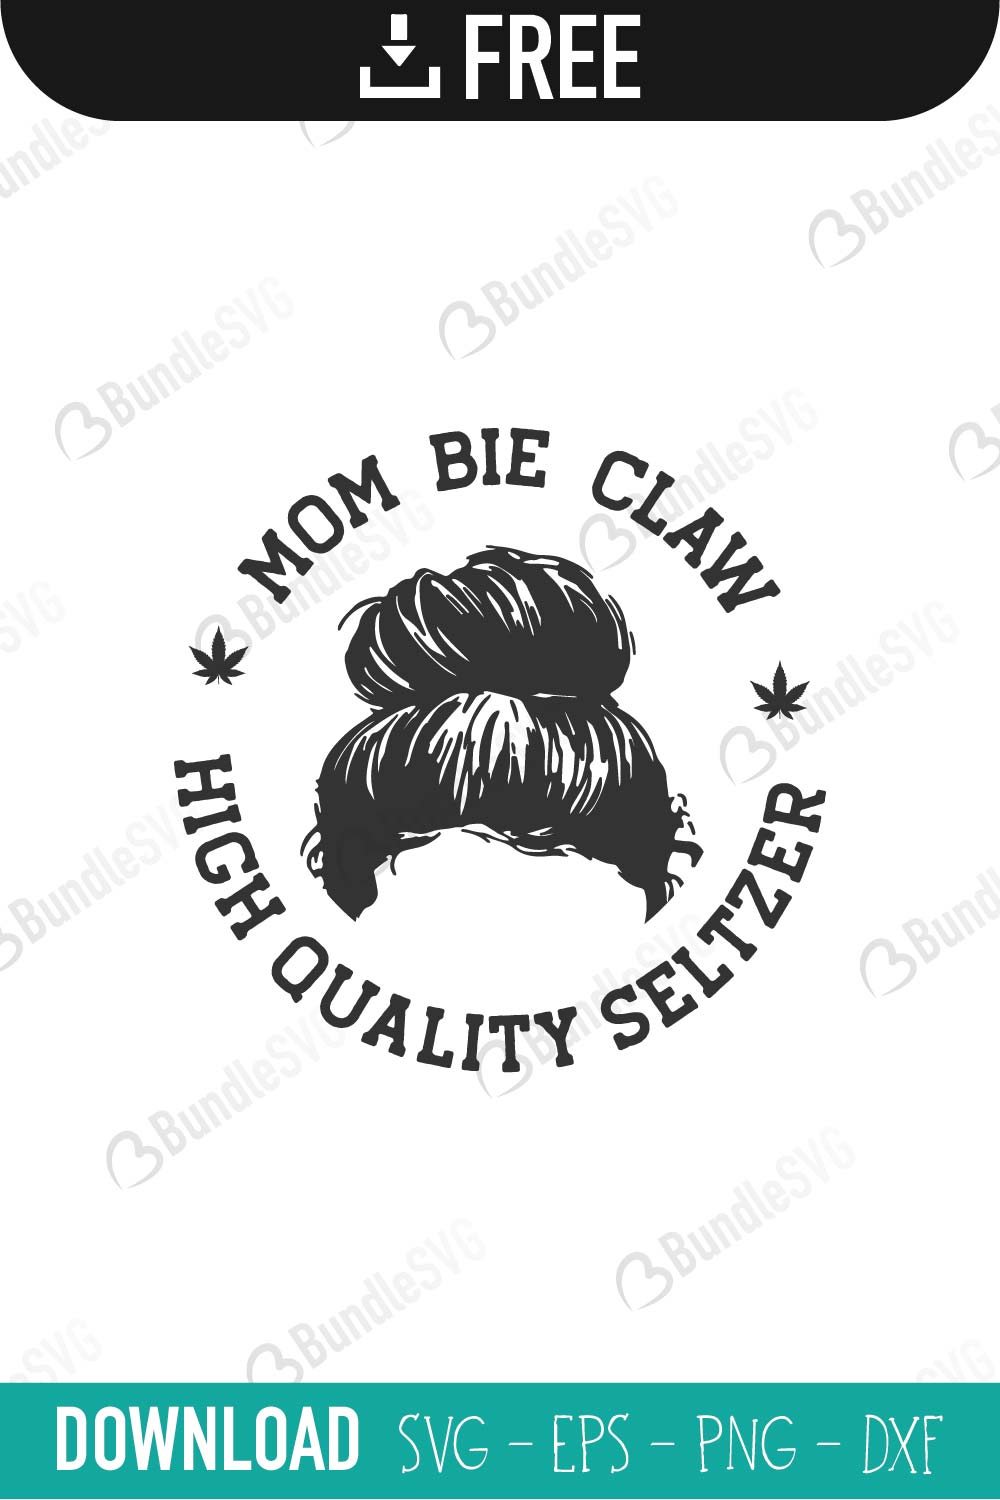 Mom Bie Claw SVG Cut Files Free Download | BundleSVG